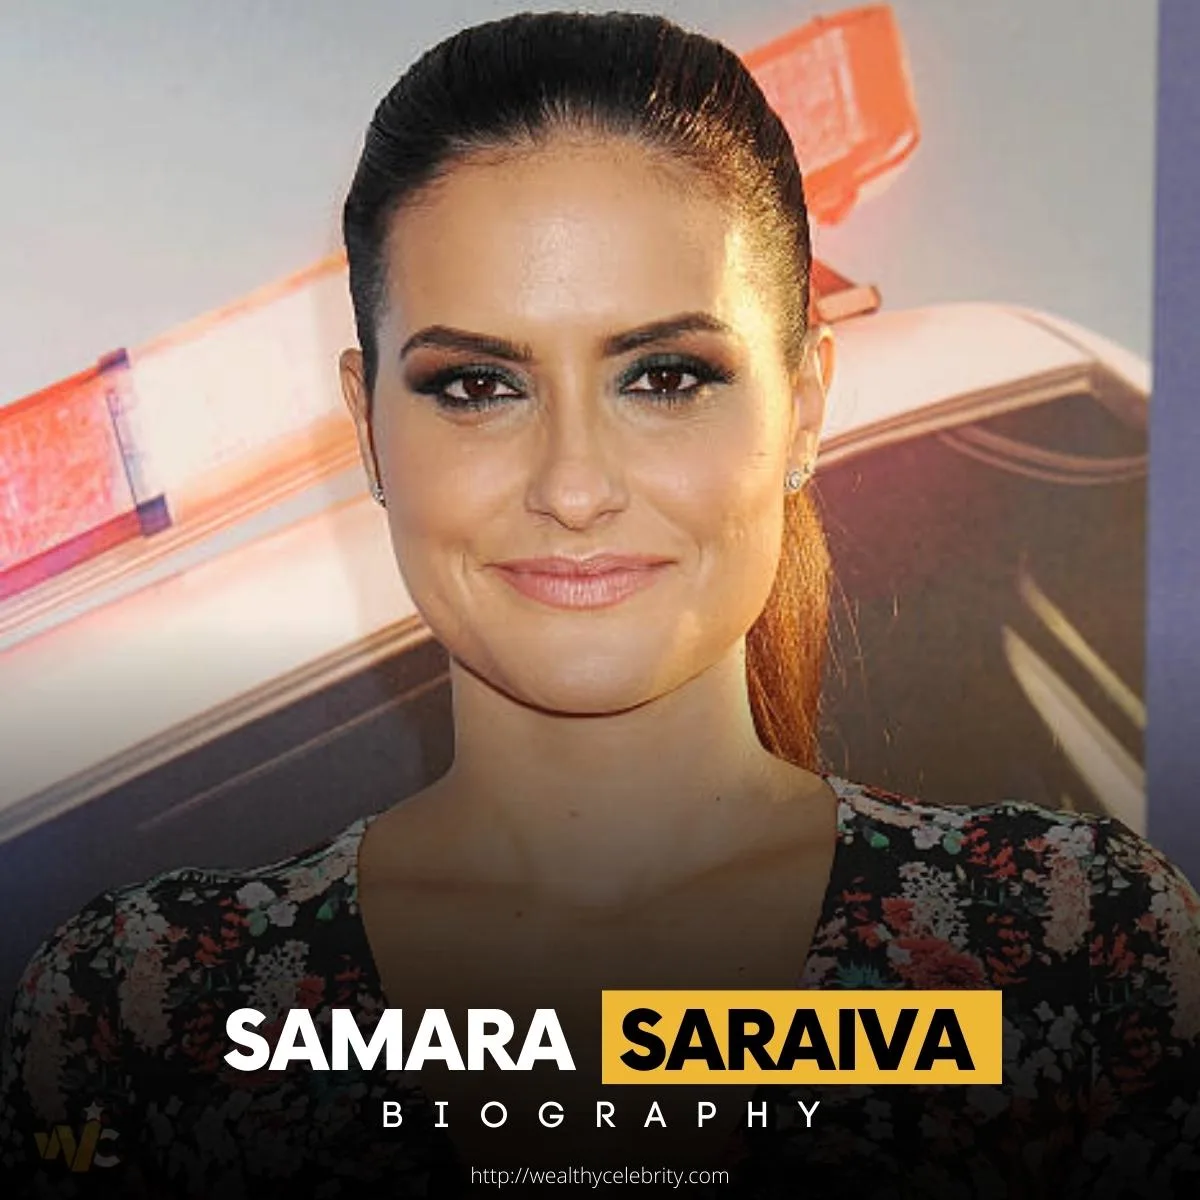 All About Samara Saraiva – Interesting Facts about Damon Wayans Jr.’s Wife